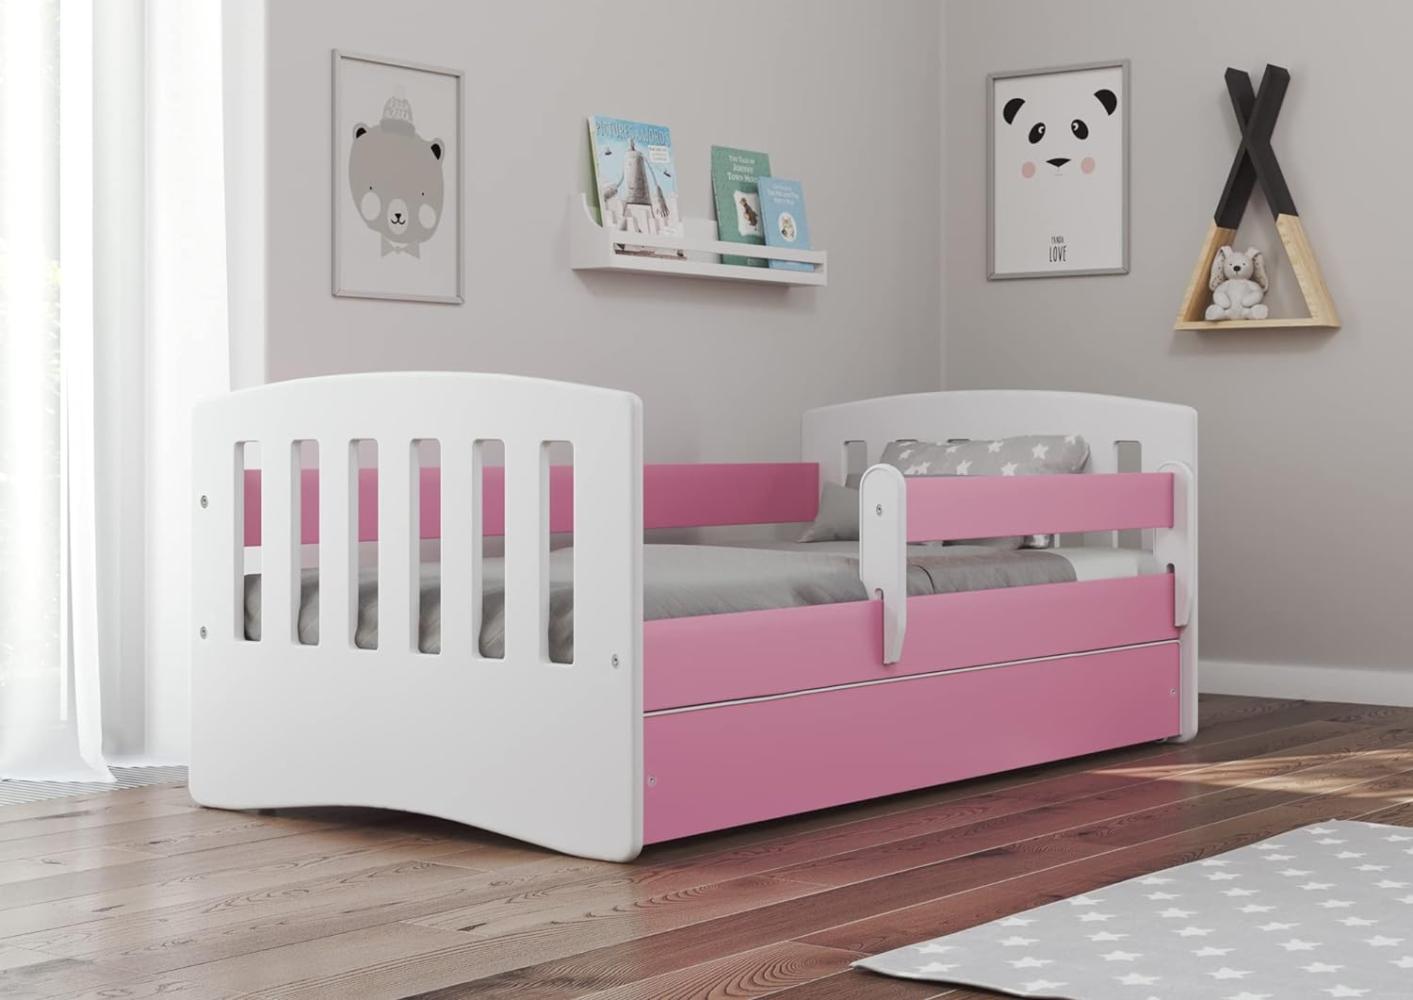 Bjird 'Classic' Kinderbett 80 x 180 cm, Rosa, inkl. Rausfallschutz, Lattenrost und Bettschublade Bild 1